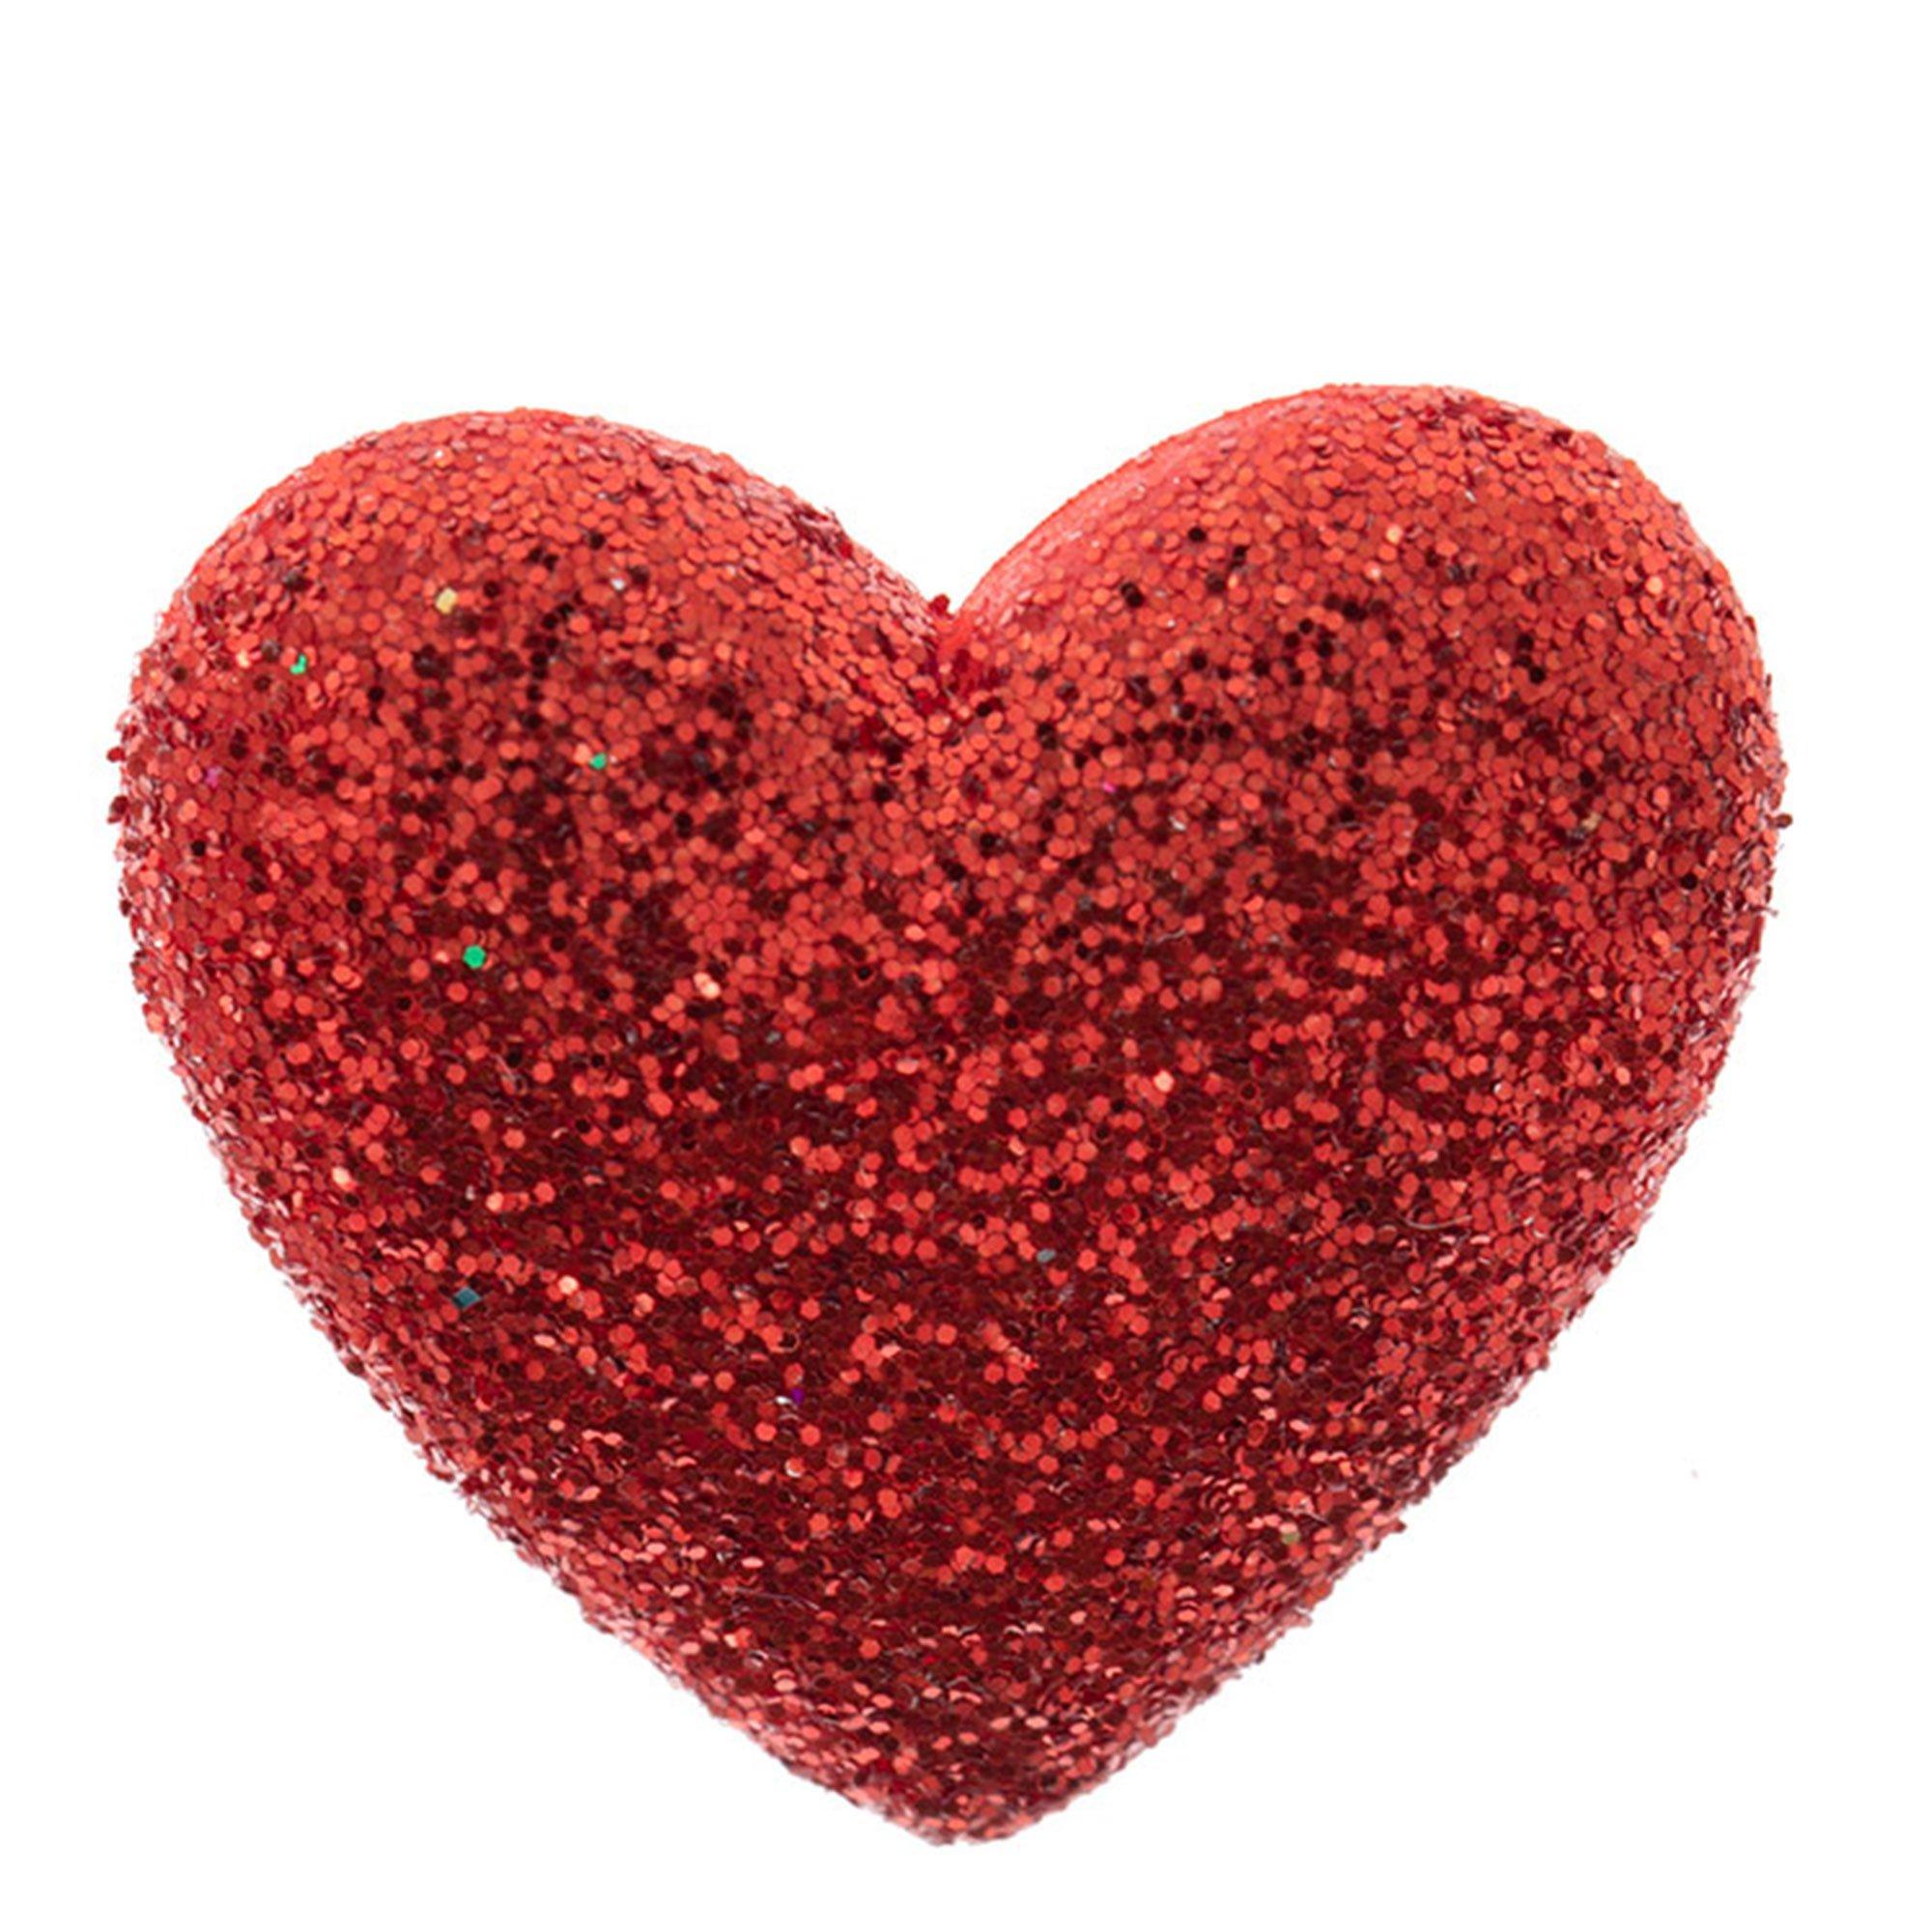 My Love Heart Buttons / Buttons Galore / Glitter Red & Pink Swirl Heart  Buttons